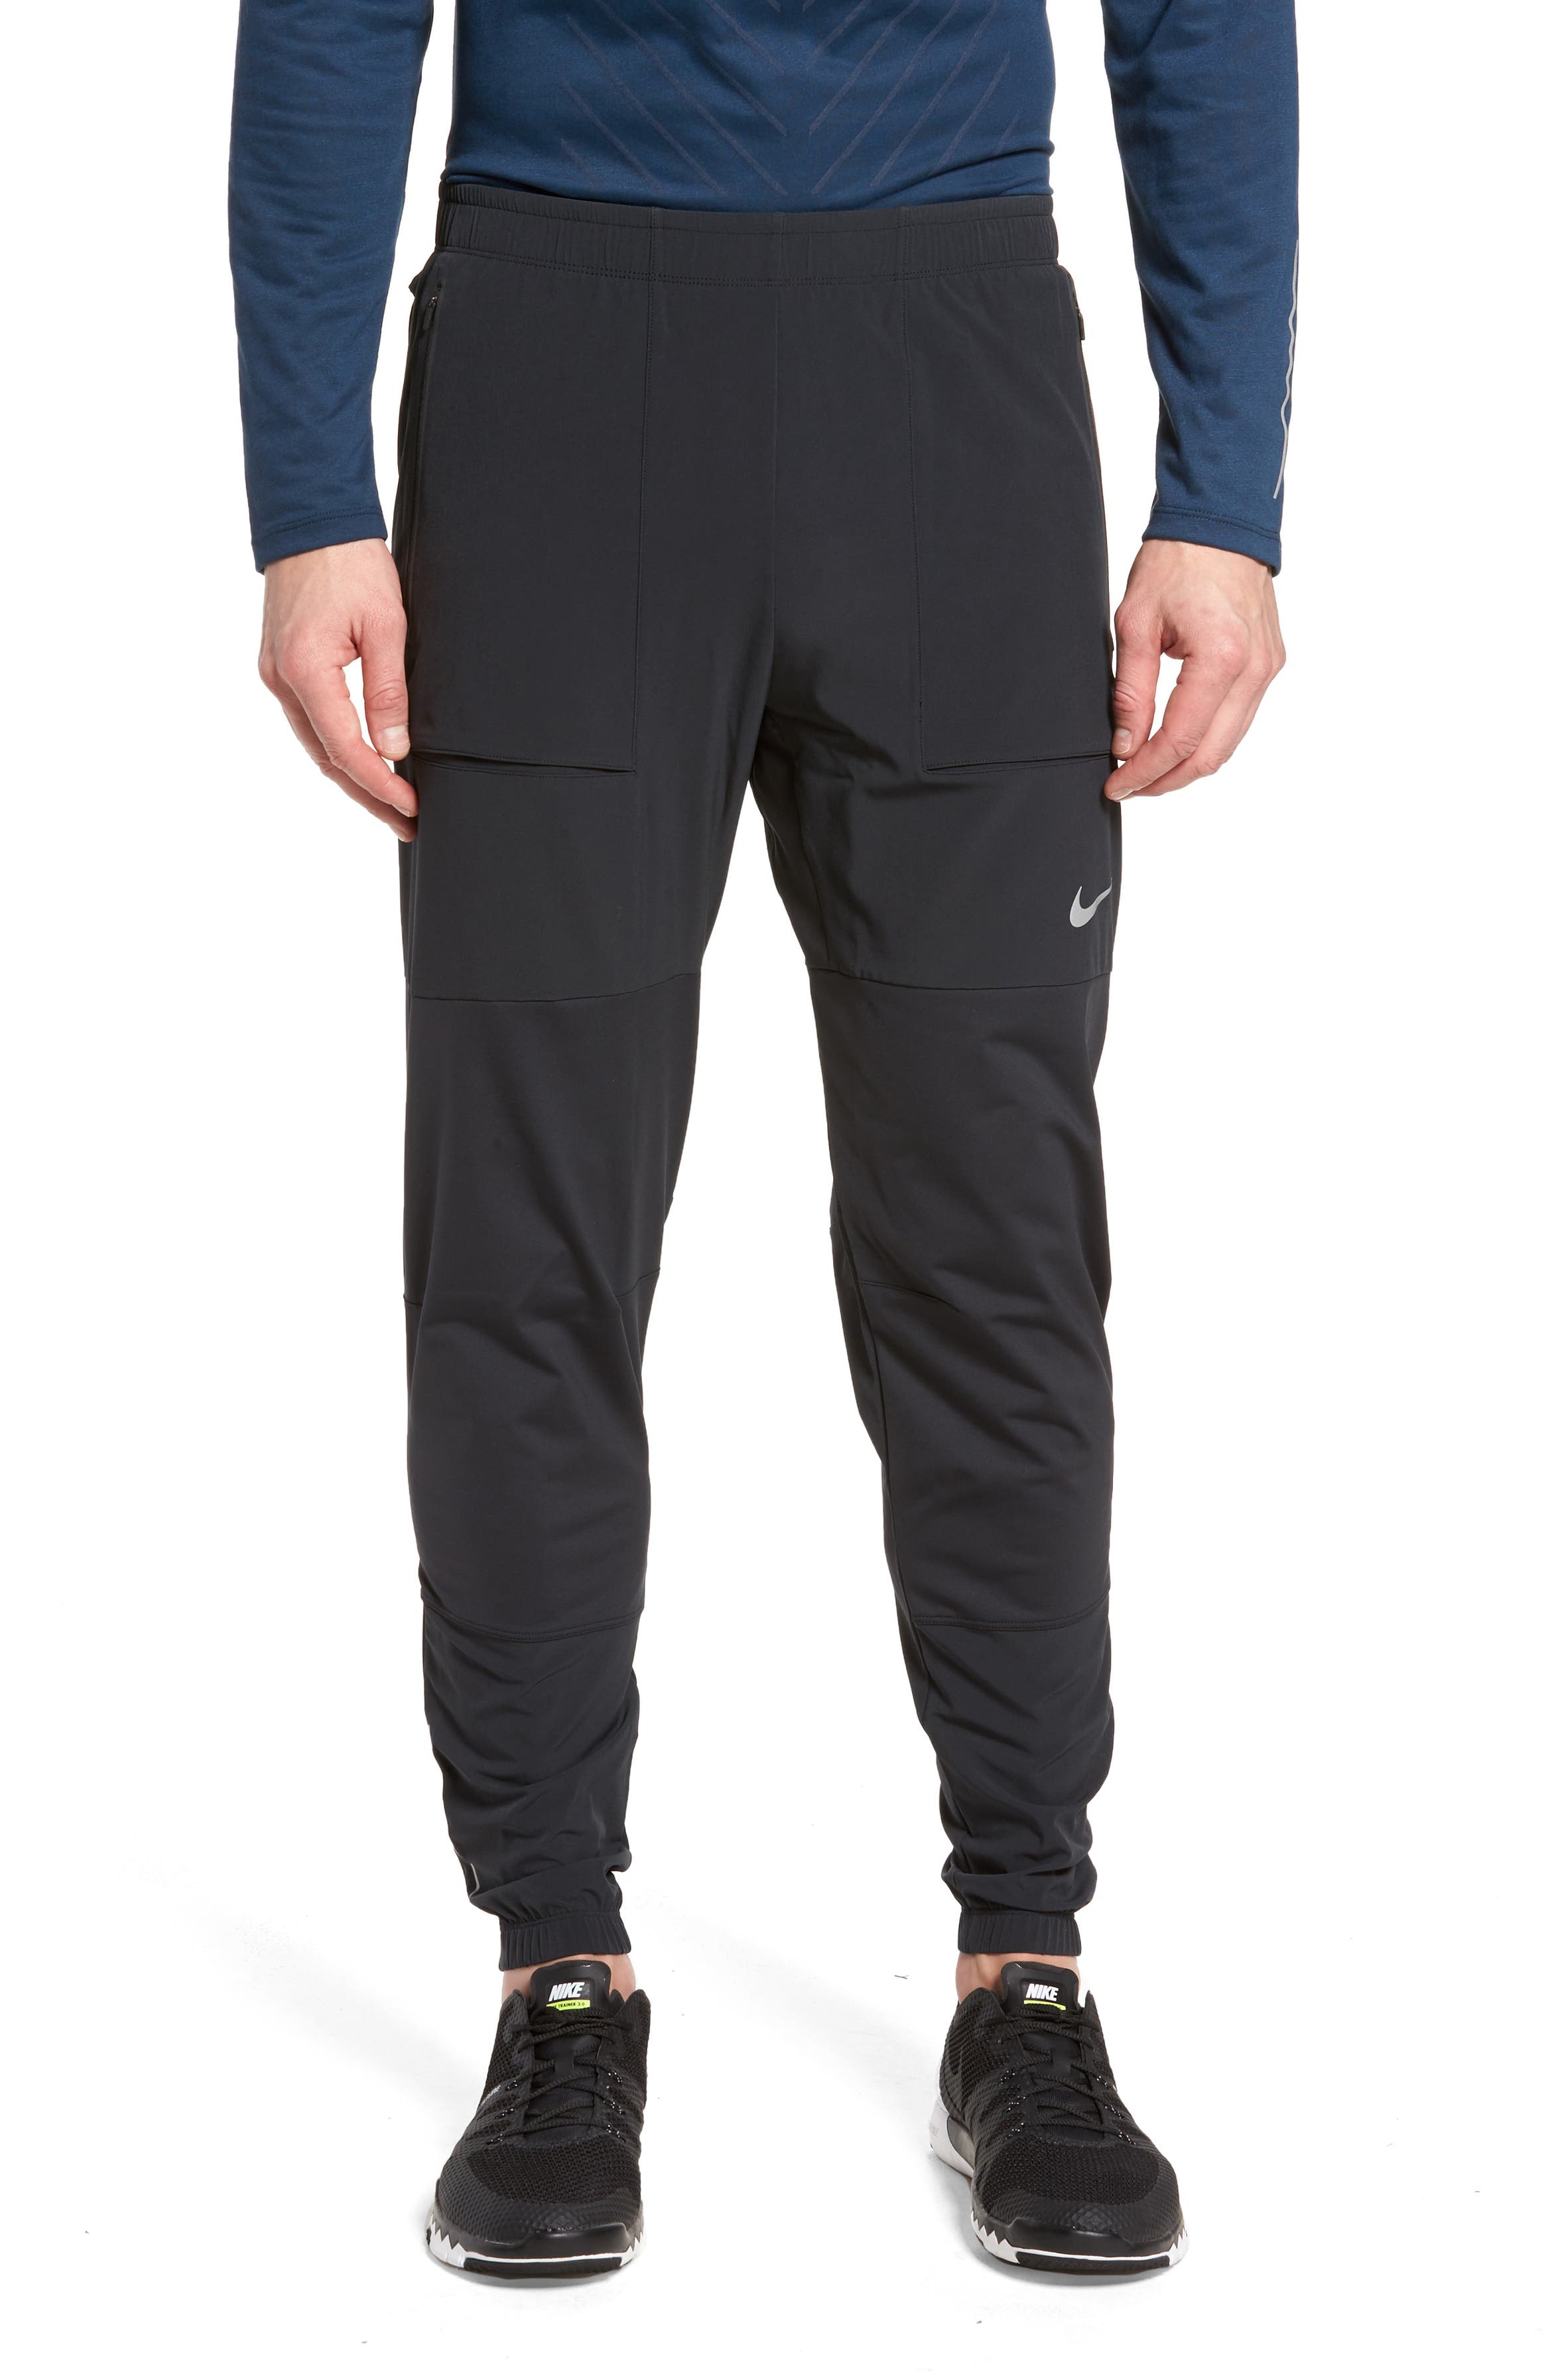 Nike Running Pants | Nordstrom